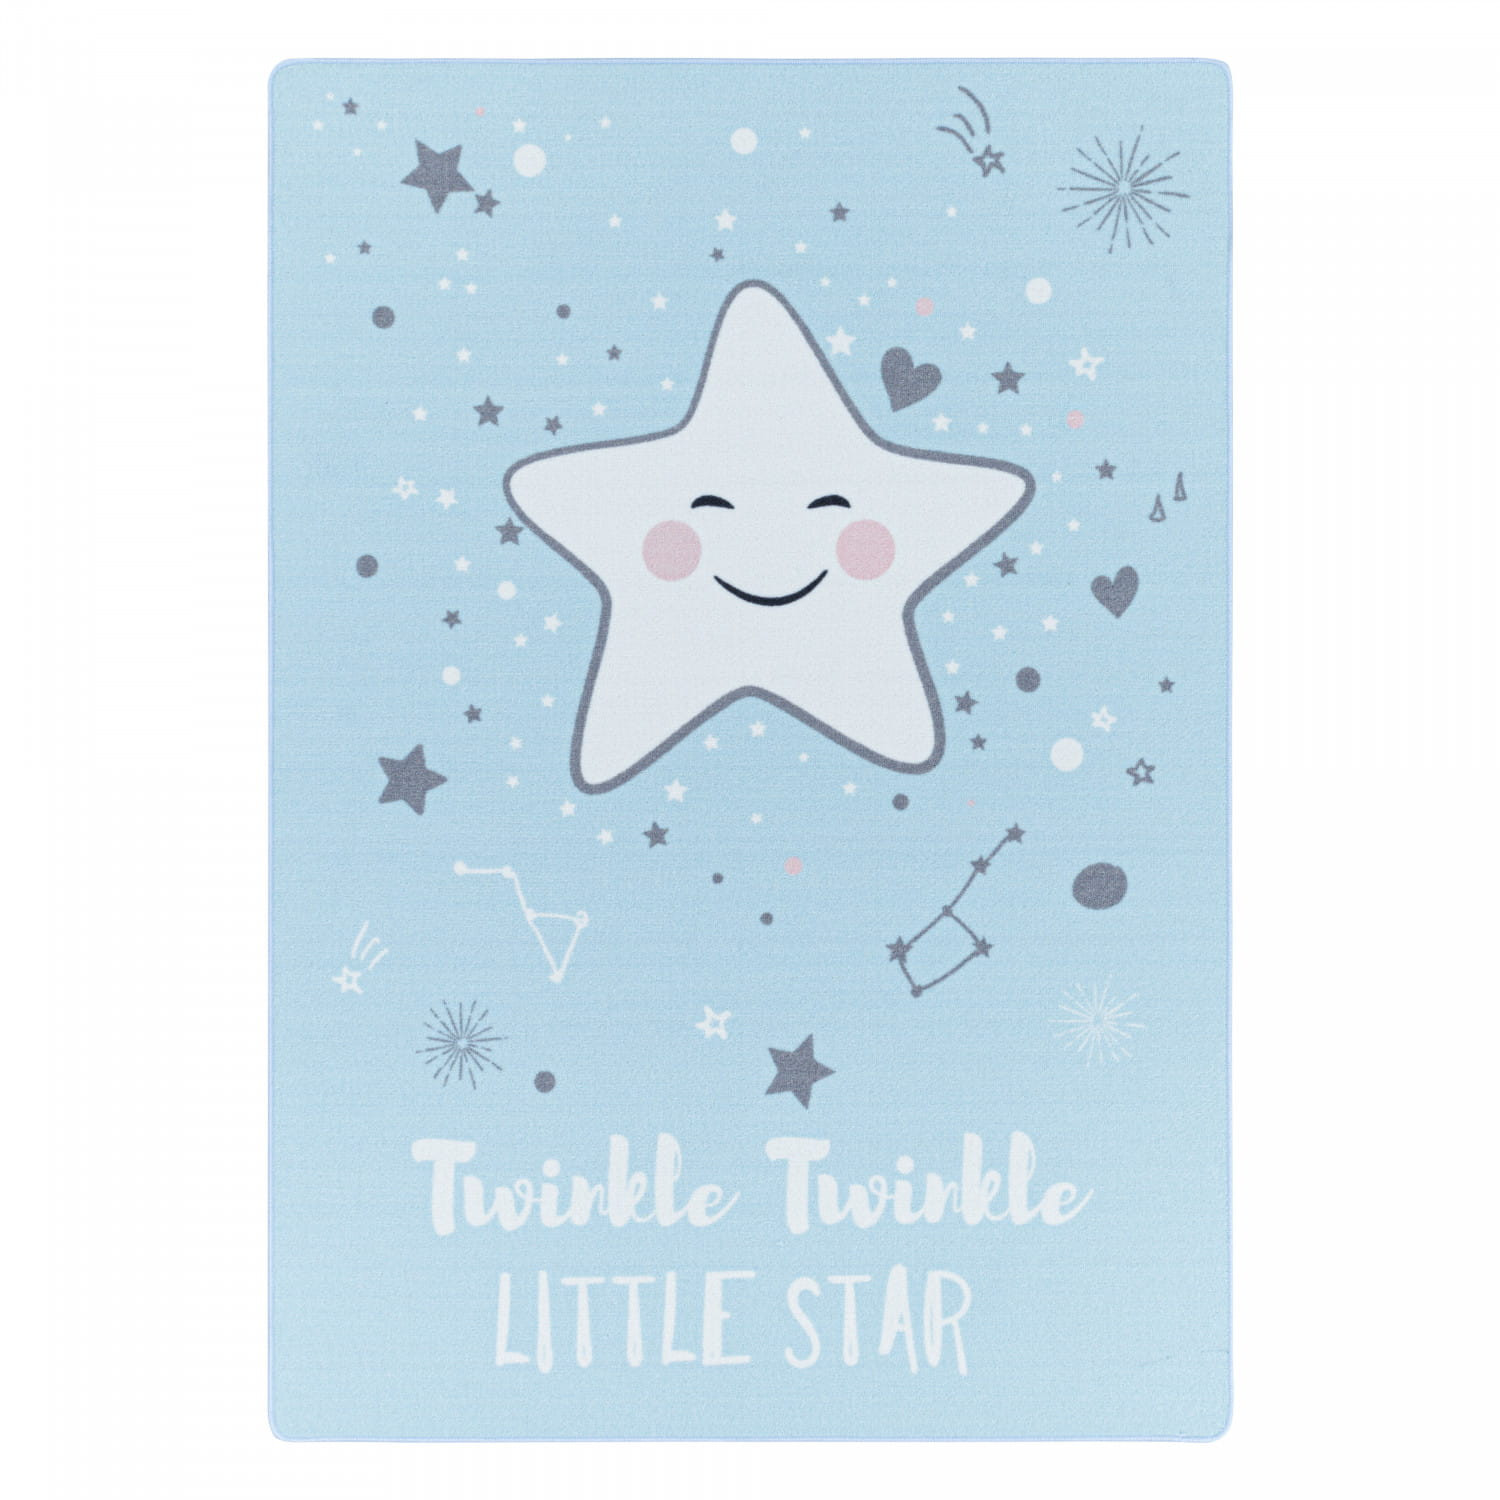 Detský protišmykový koberec Play hviezda modrá